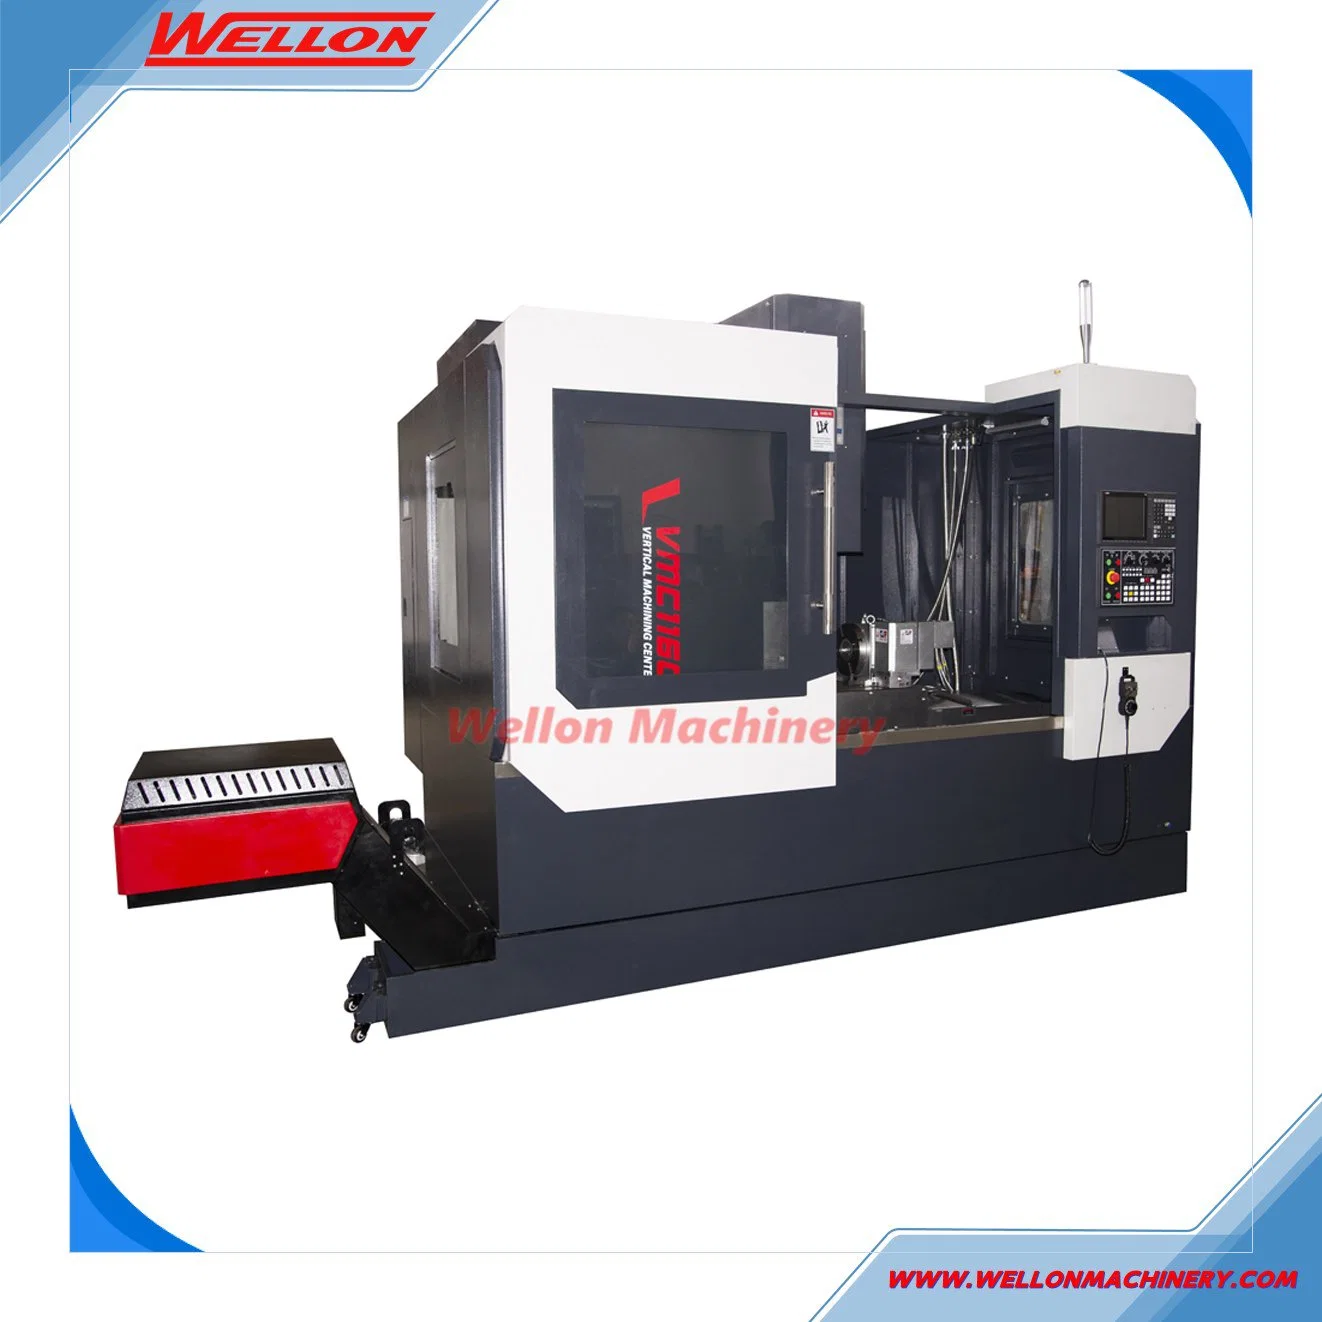 Vmc1160 5 Axis CNC MMilling Machine Tools مع Fanuc Controller آلات الصين